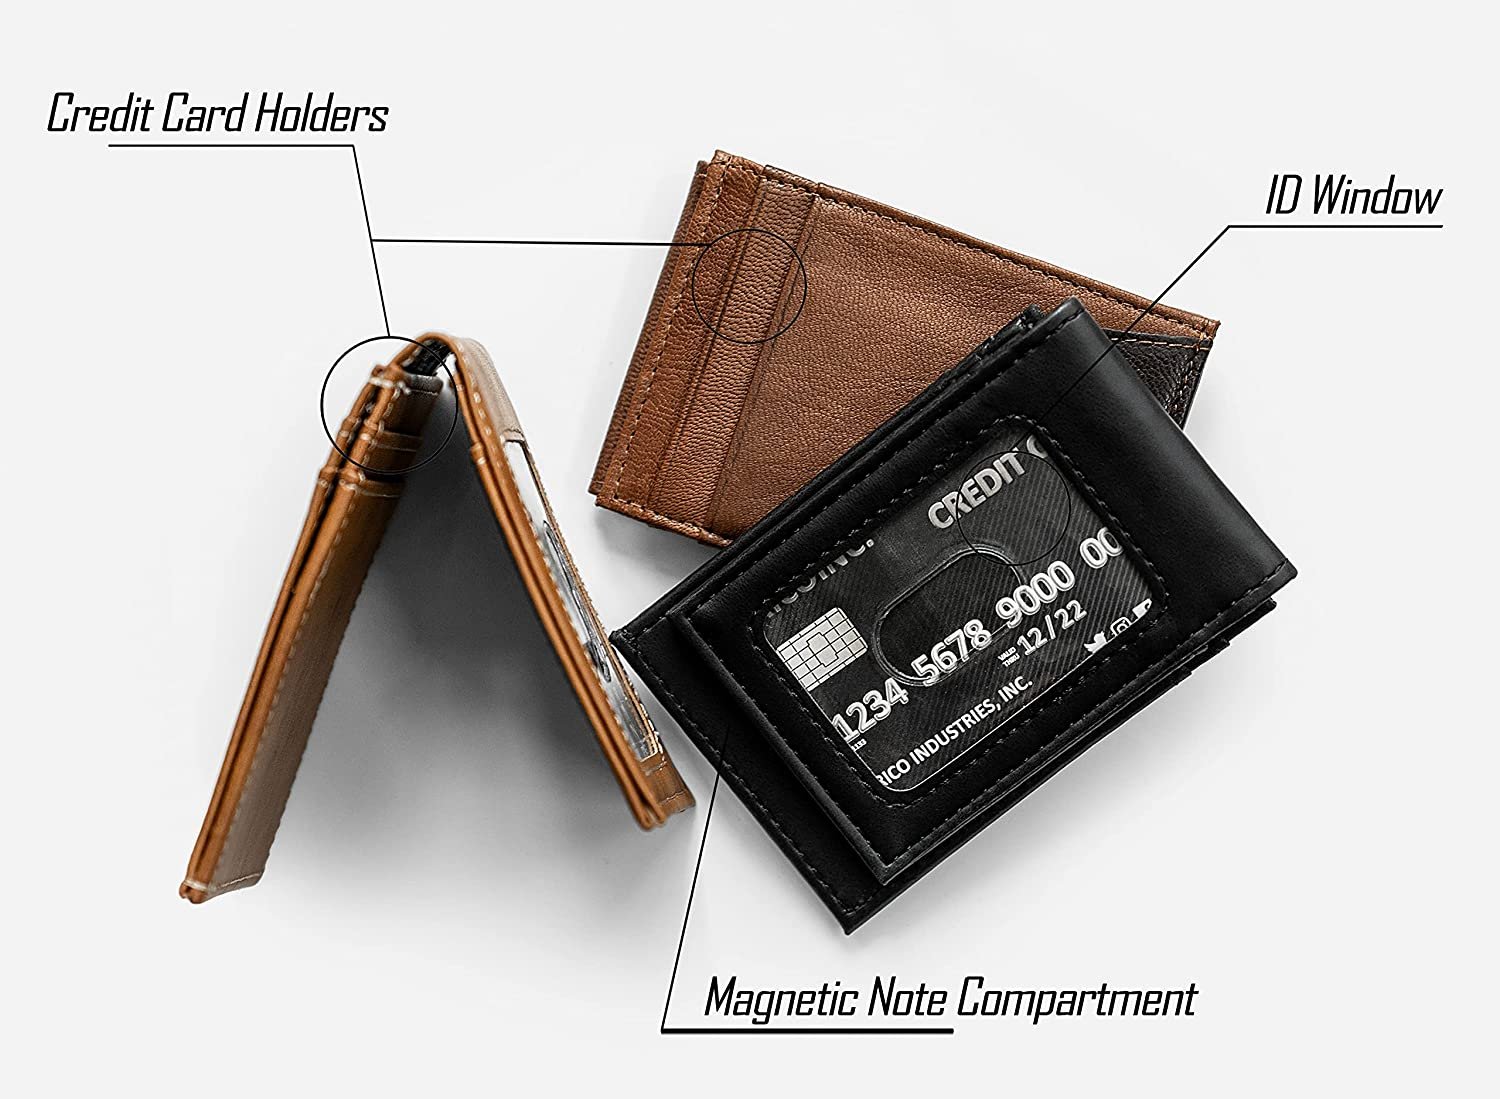 Portland Trail Blazers Premium Brown Leather Wallet, Front Pocket Magnetic Money Clip, Laser Engraved, Vegan